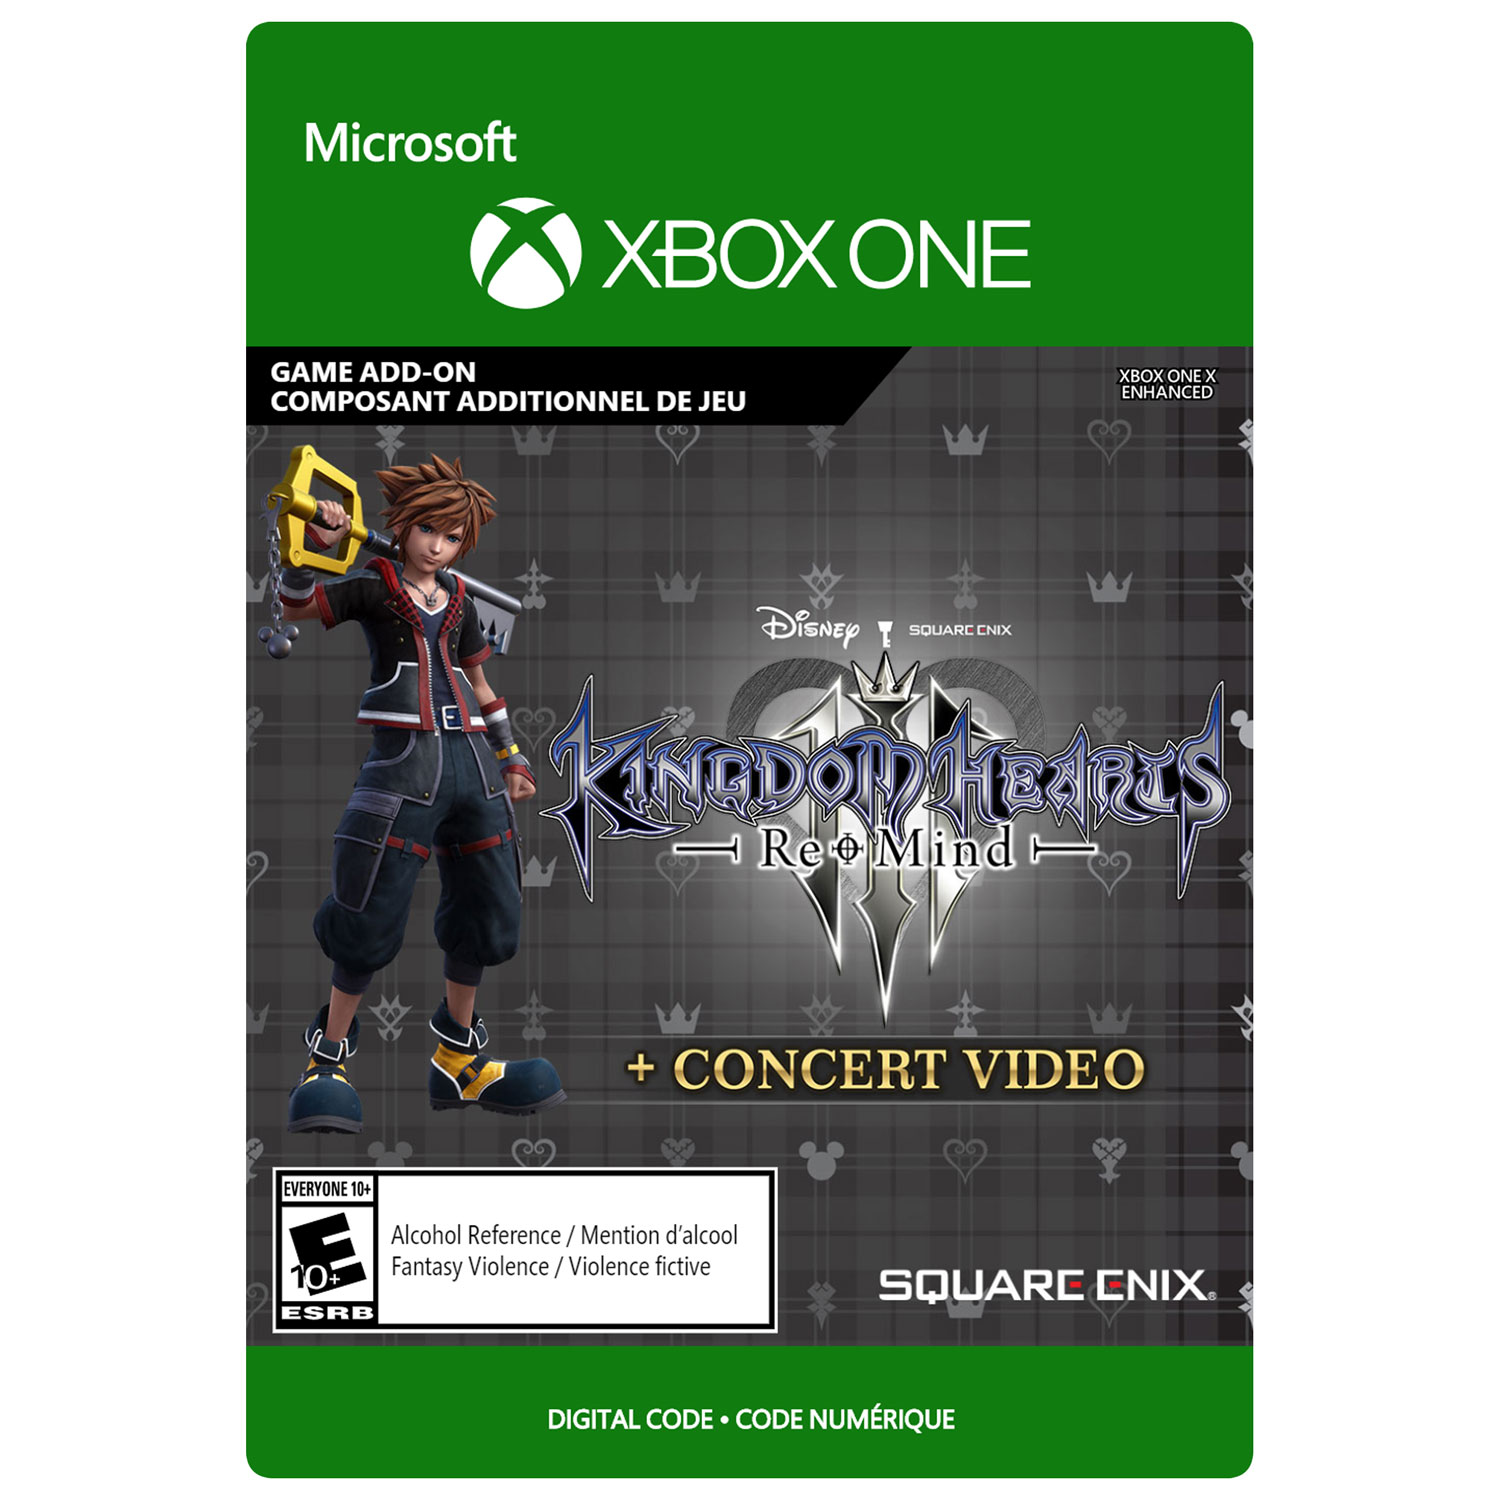 Kingdom Hearts 3: Re Mind & Concert Video (Xbox One) - Digital Download